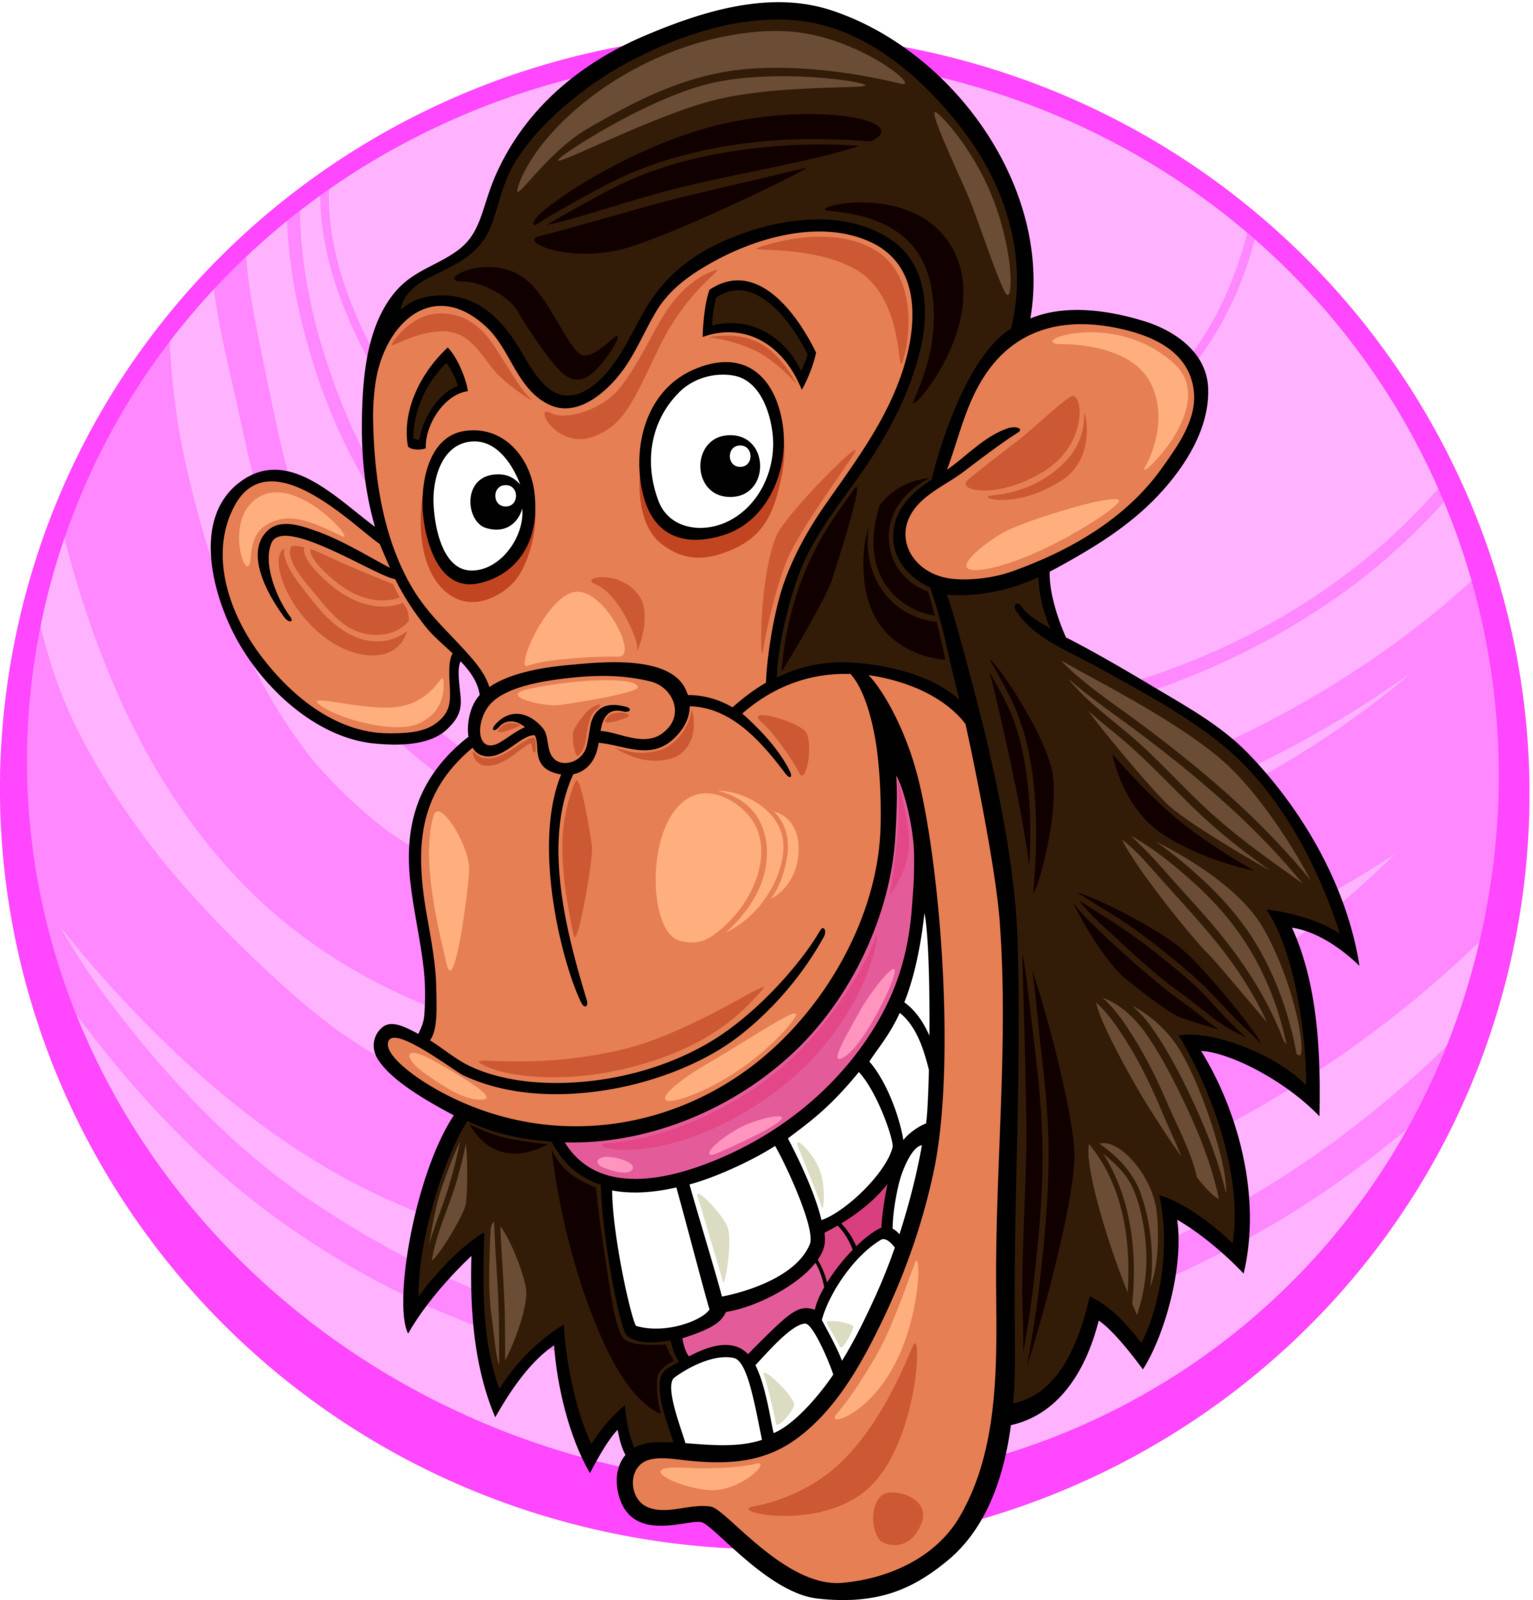 cartoon illustration of funny chimpanzee ape